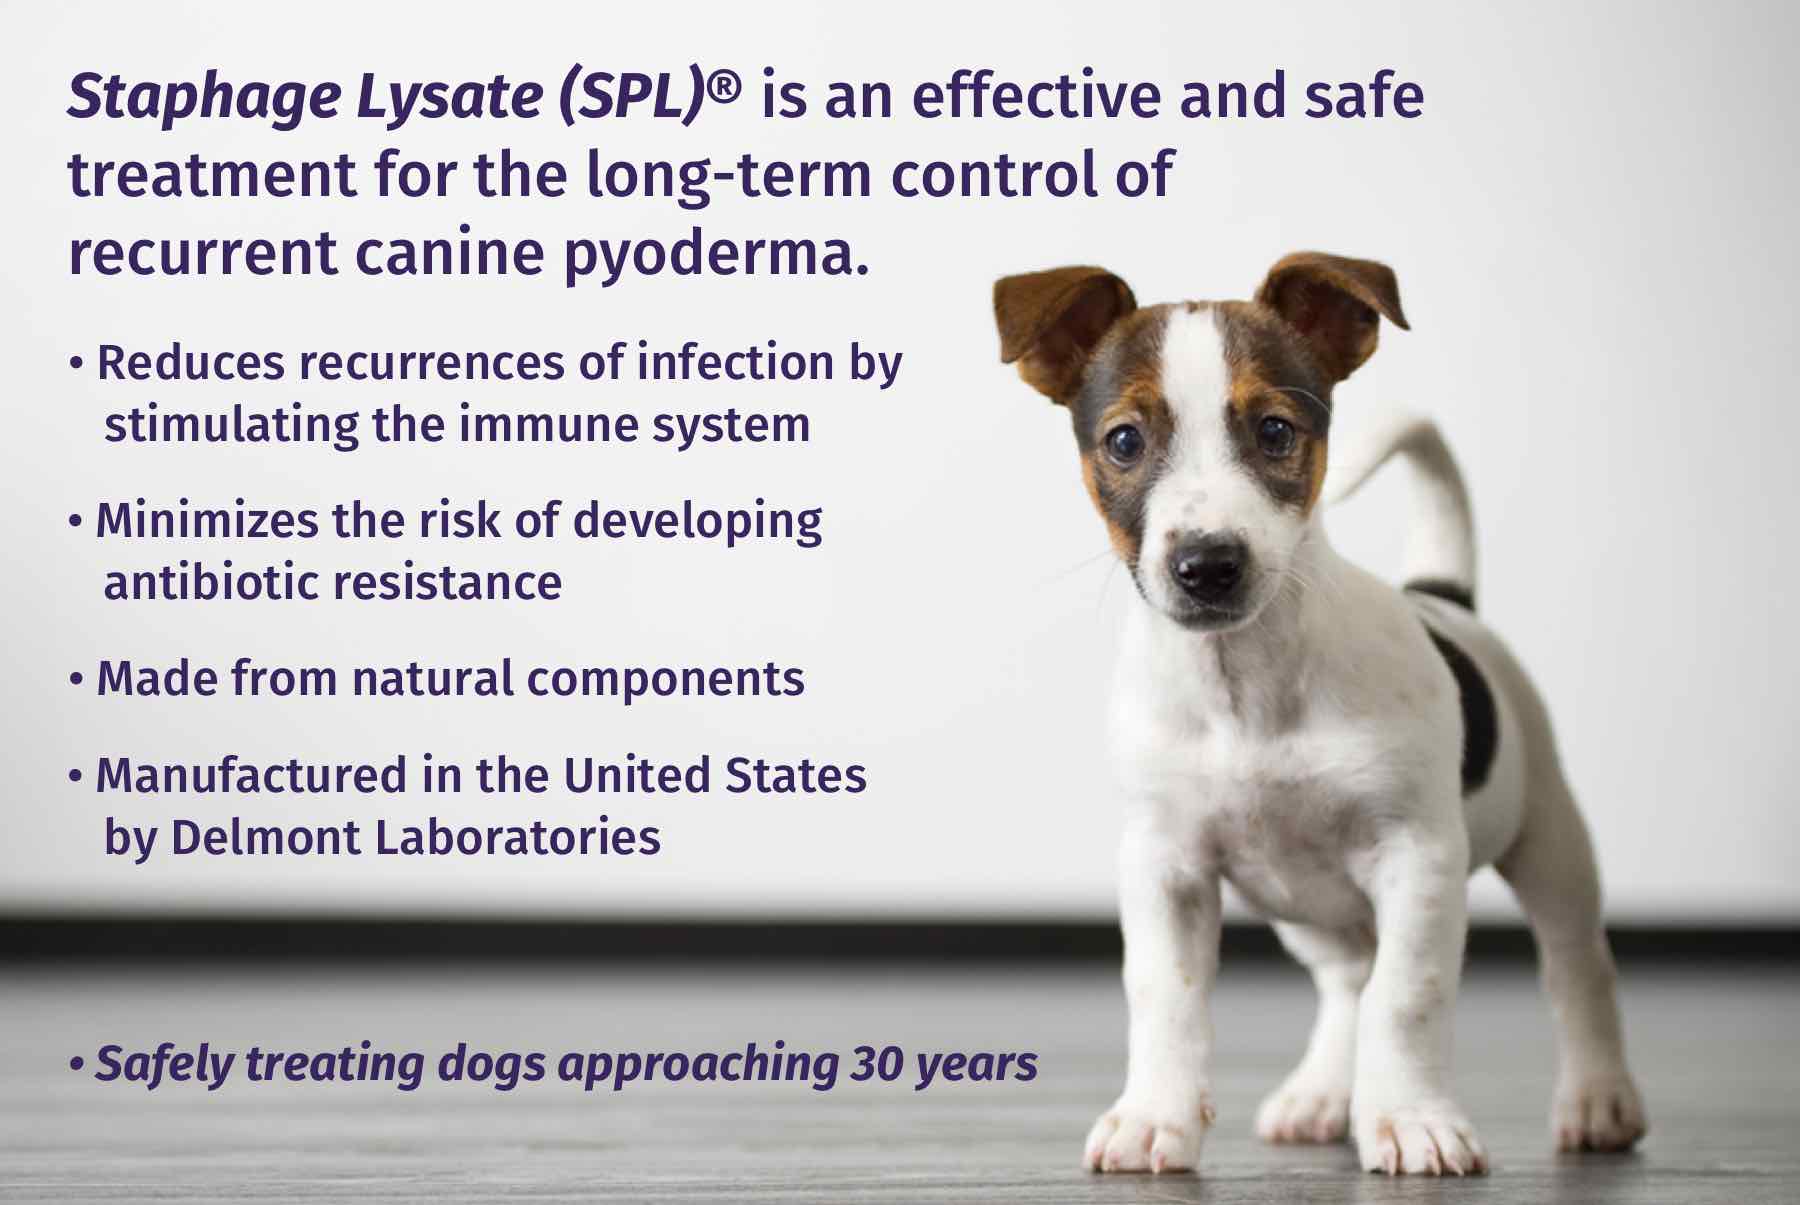 Delmont Laboratories | Control Recurrent Canine Pyoderma